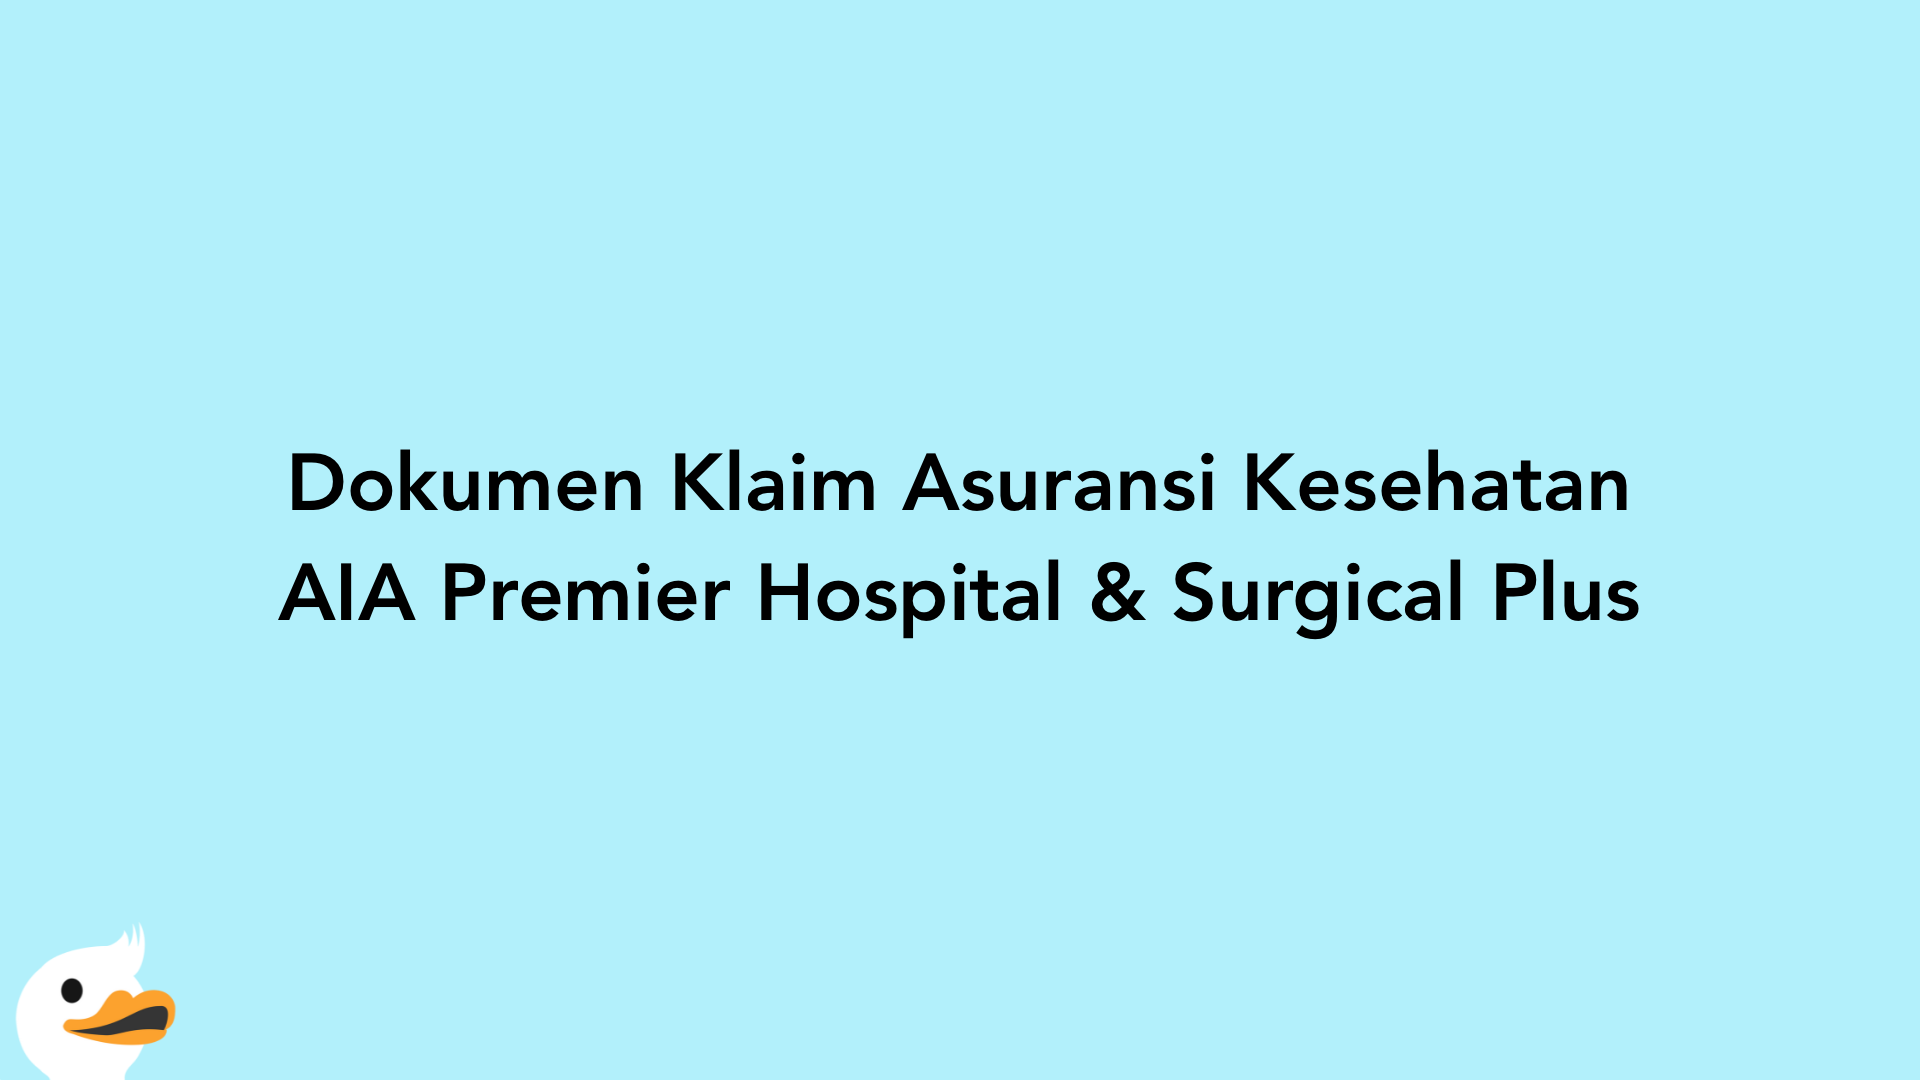 Dokumen Klaim Asuransi Kesehatan AIA Premier Hospital & Surgical Plus